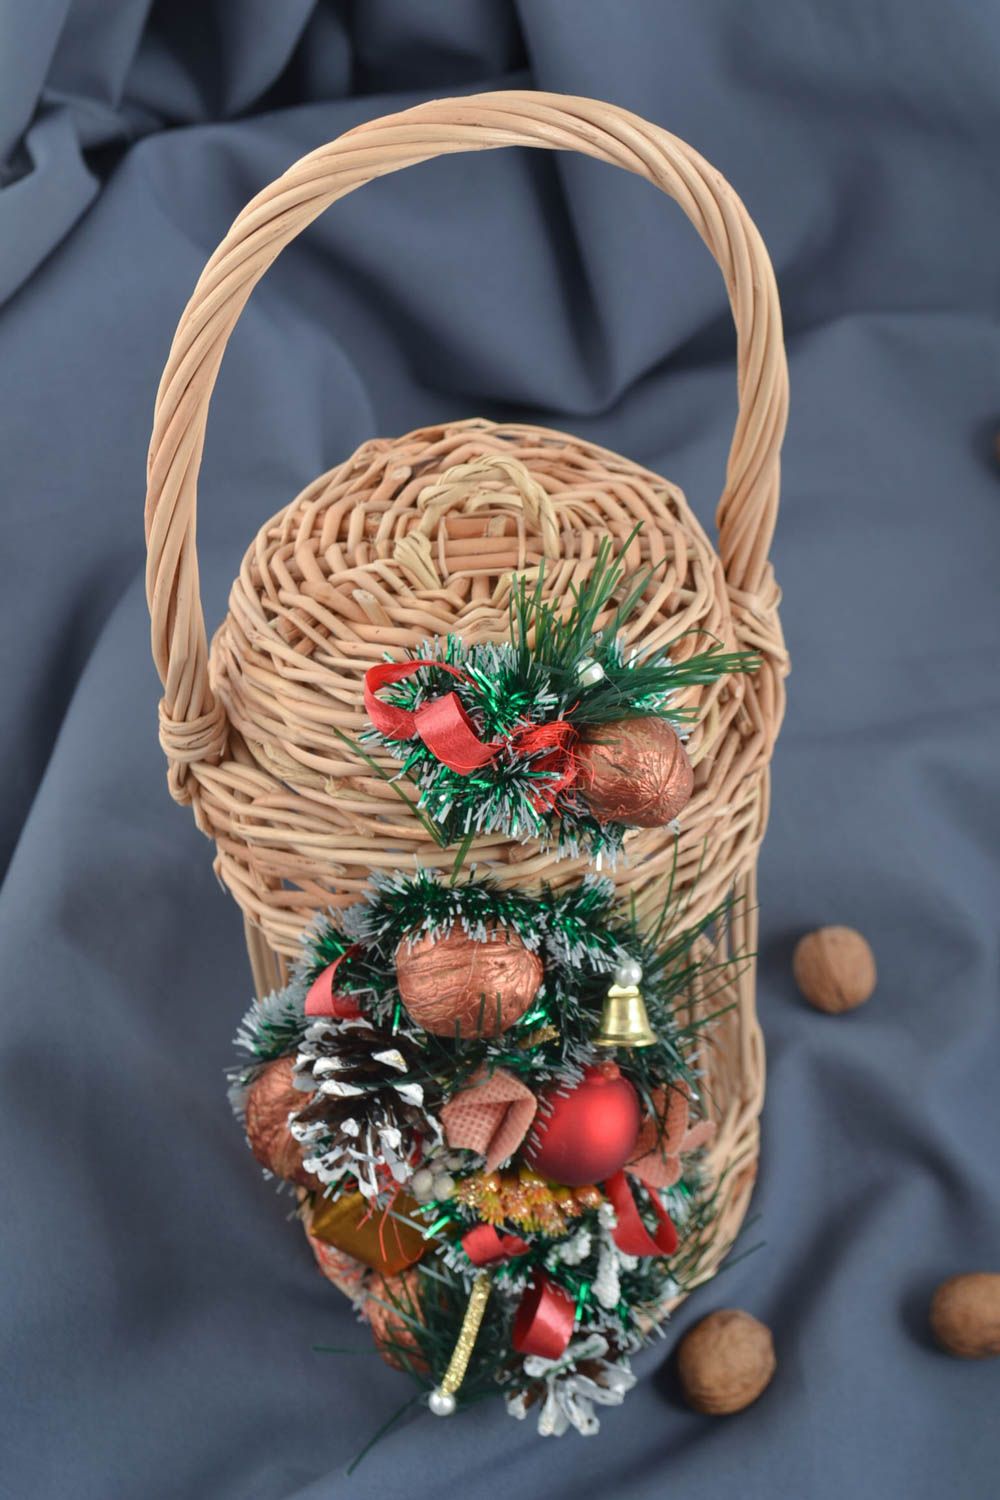 Unusual handmade woven basket Easter basket ideas designer accessories photo 1